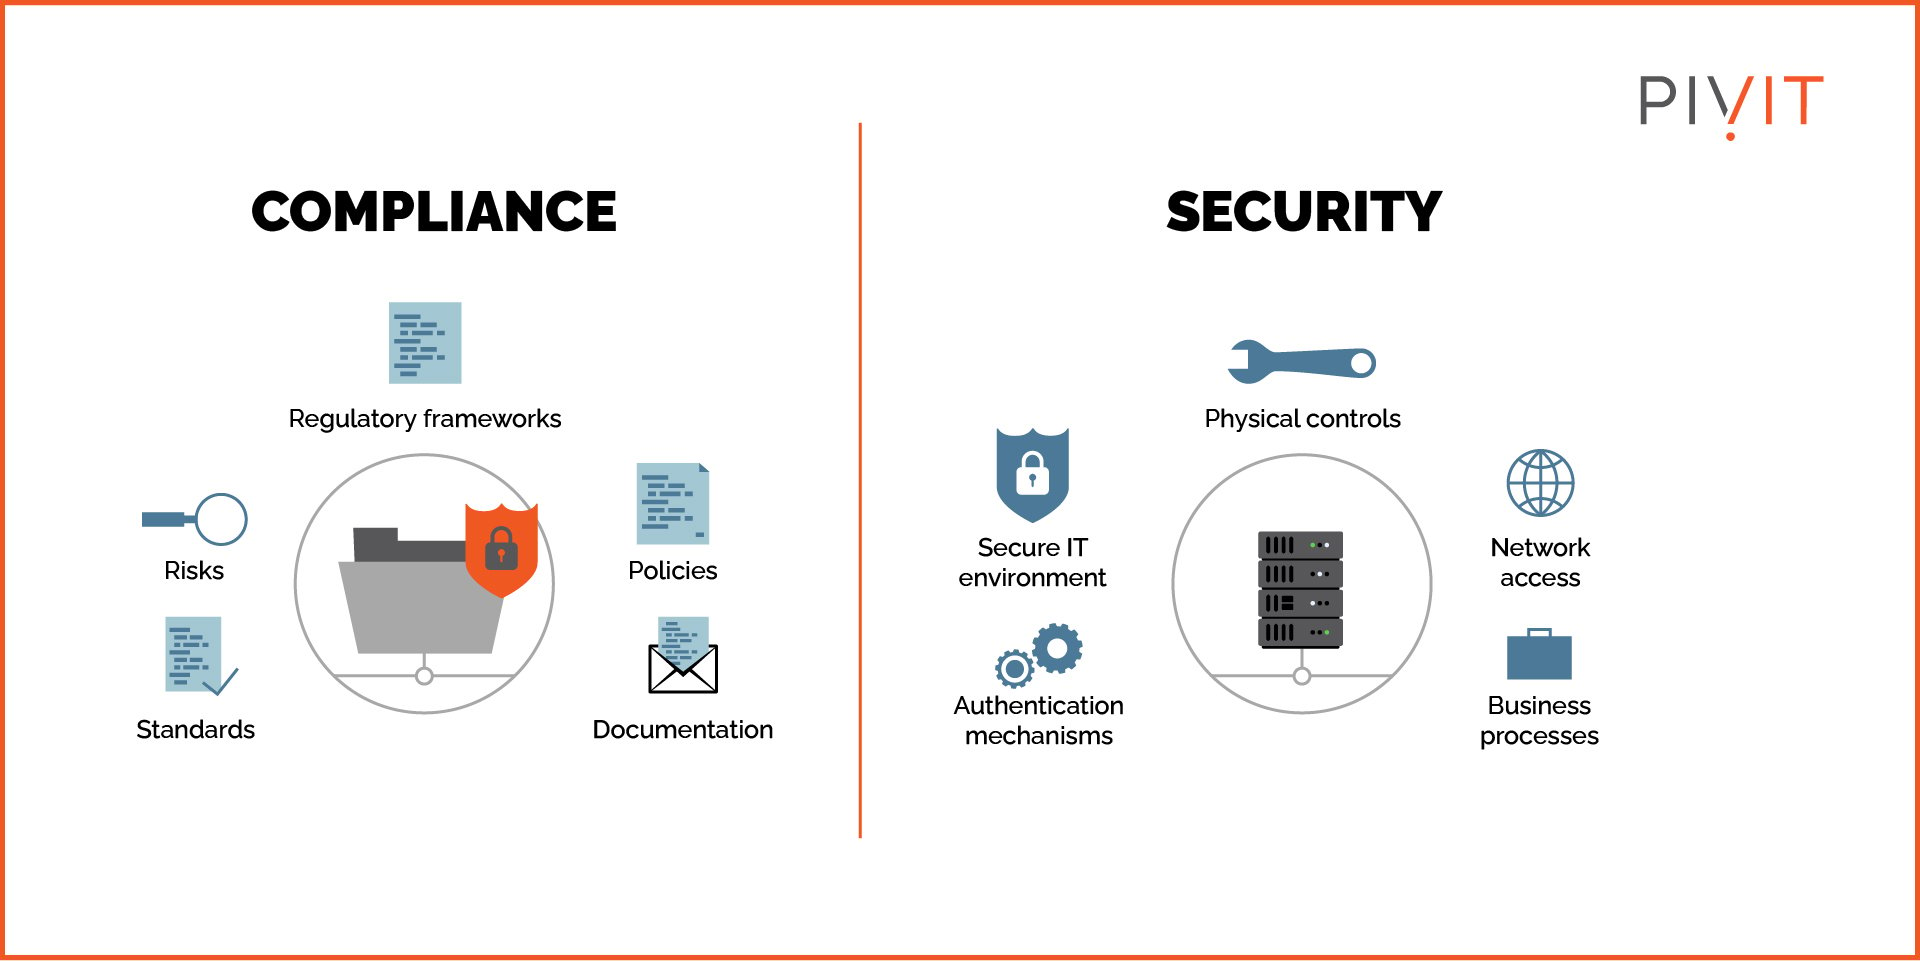 Compliance versus security parameters